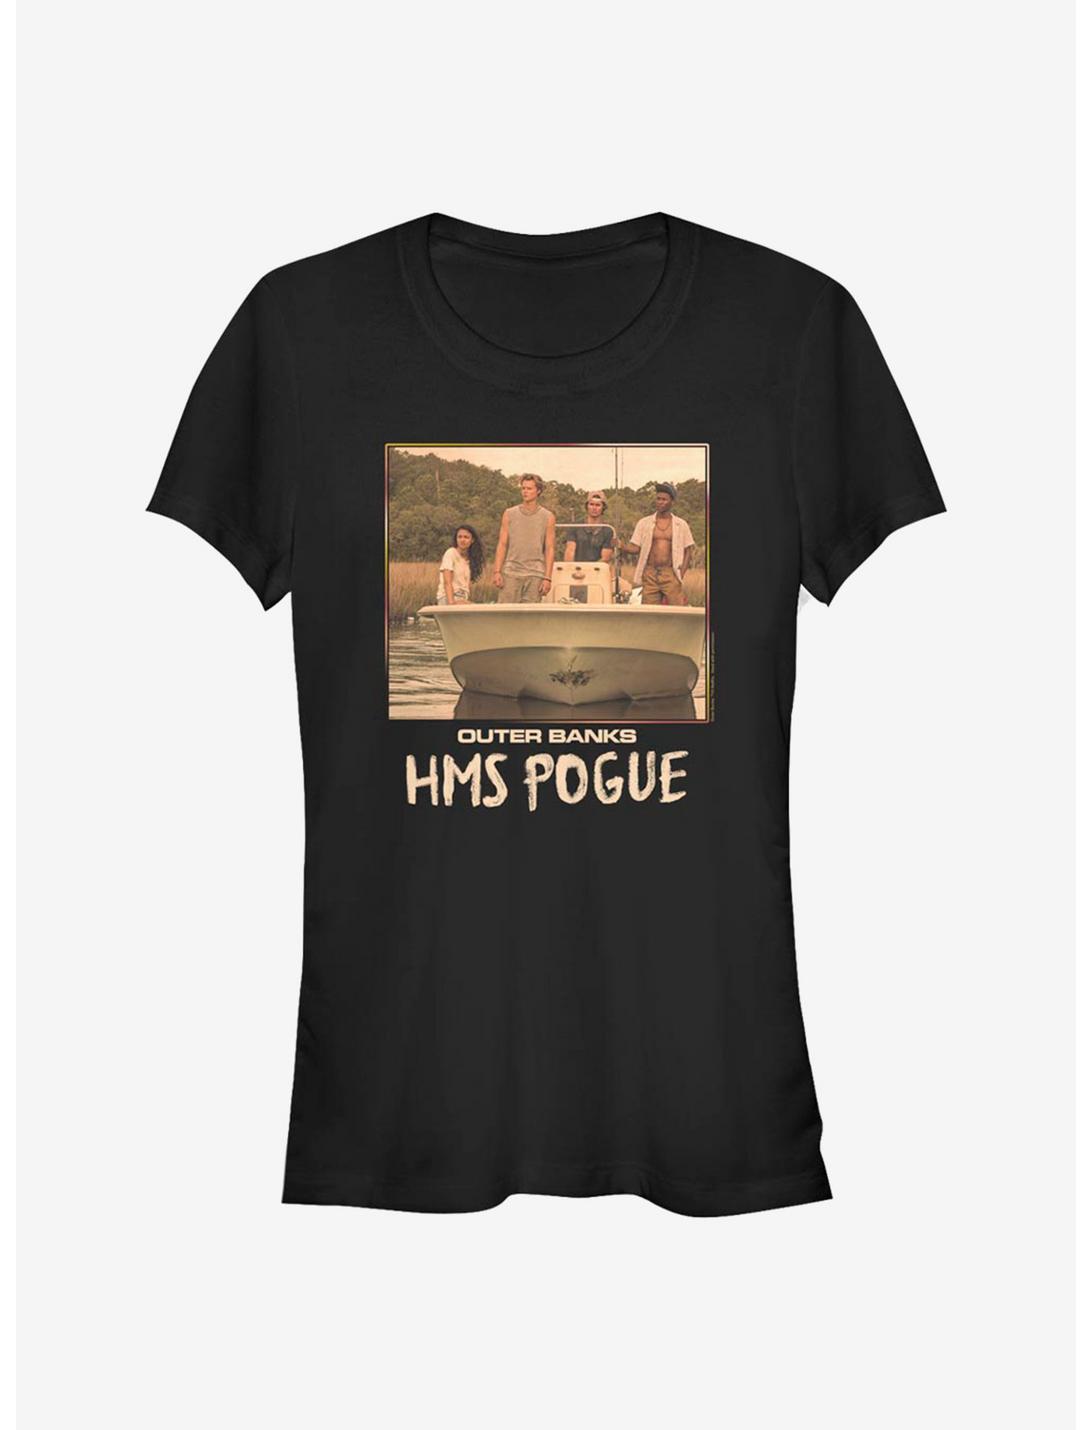 Outer Banks HMS Pogue Square Girls T-Shirt, BLACK, hi-res